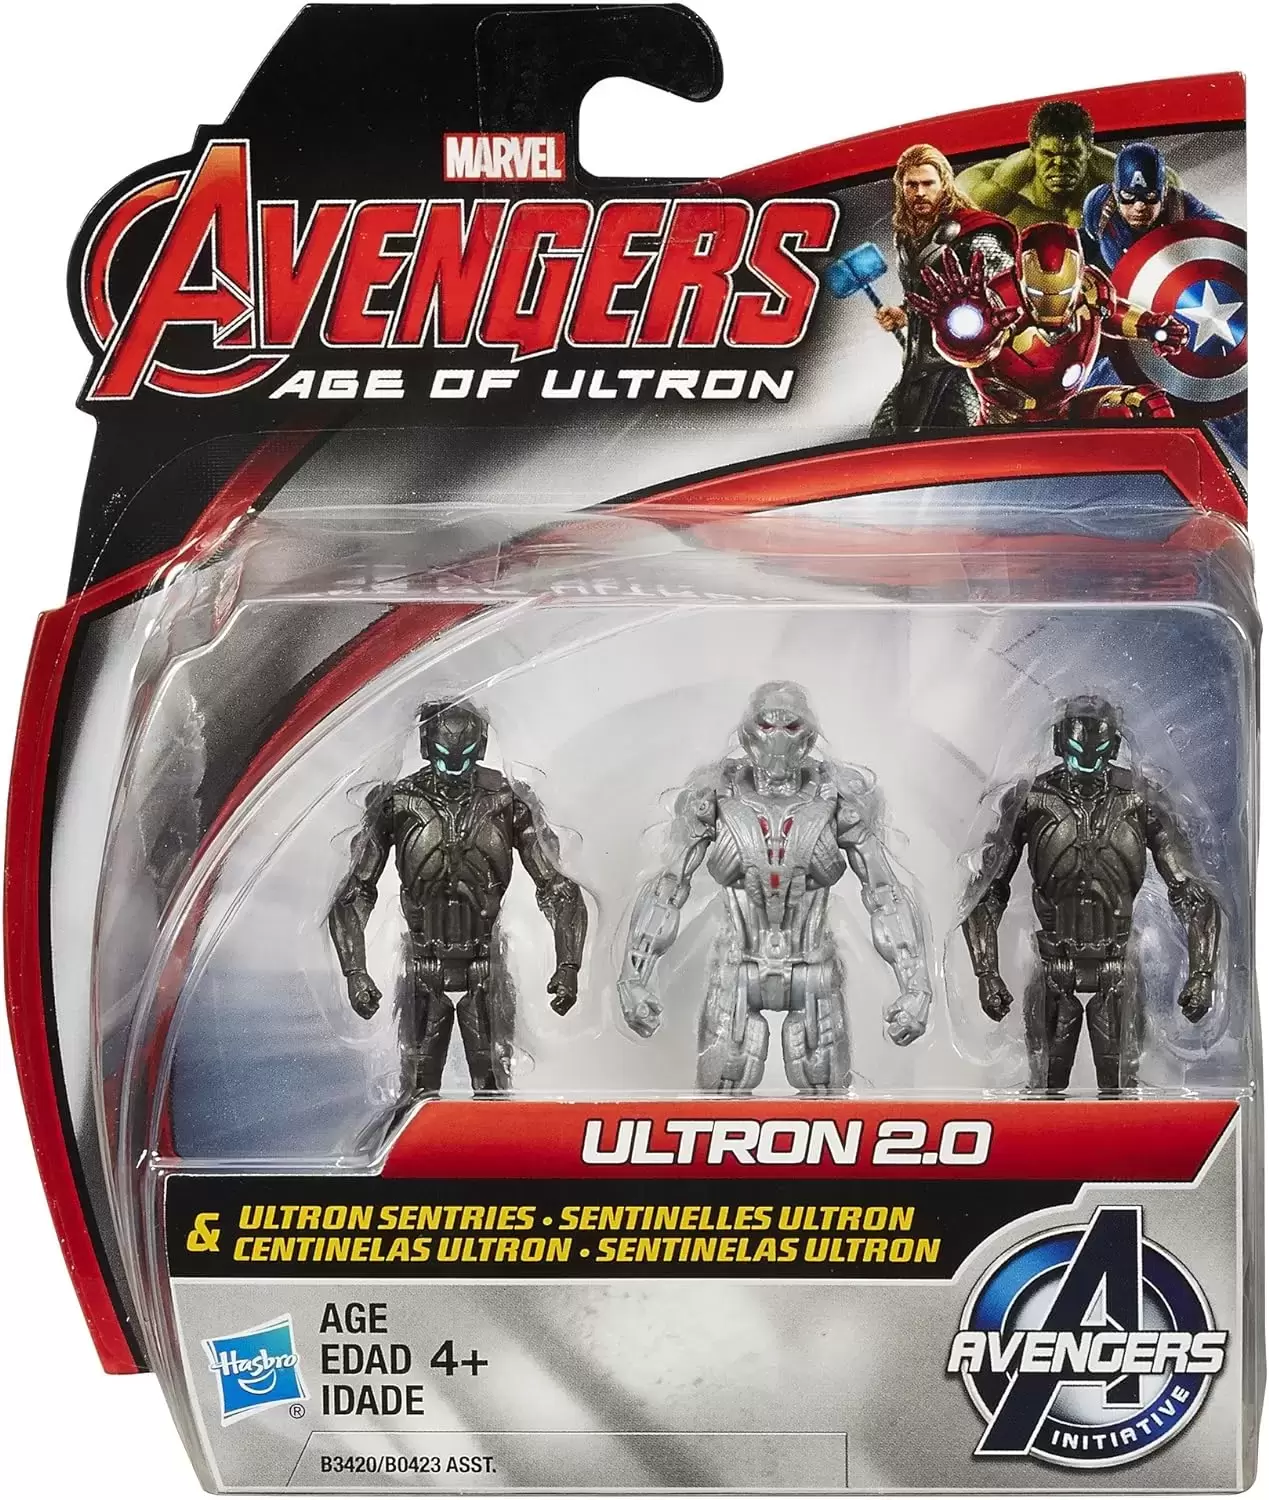 Avengers : Age of Ultron - Ultron 2.0 & Ultron Sentries